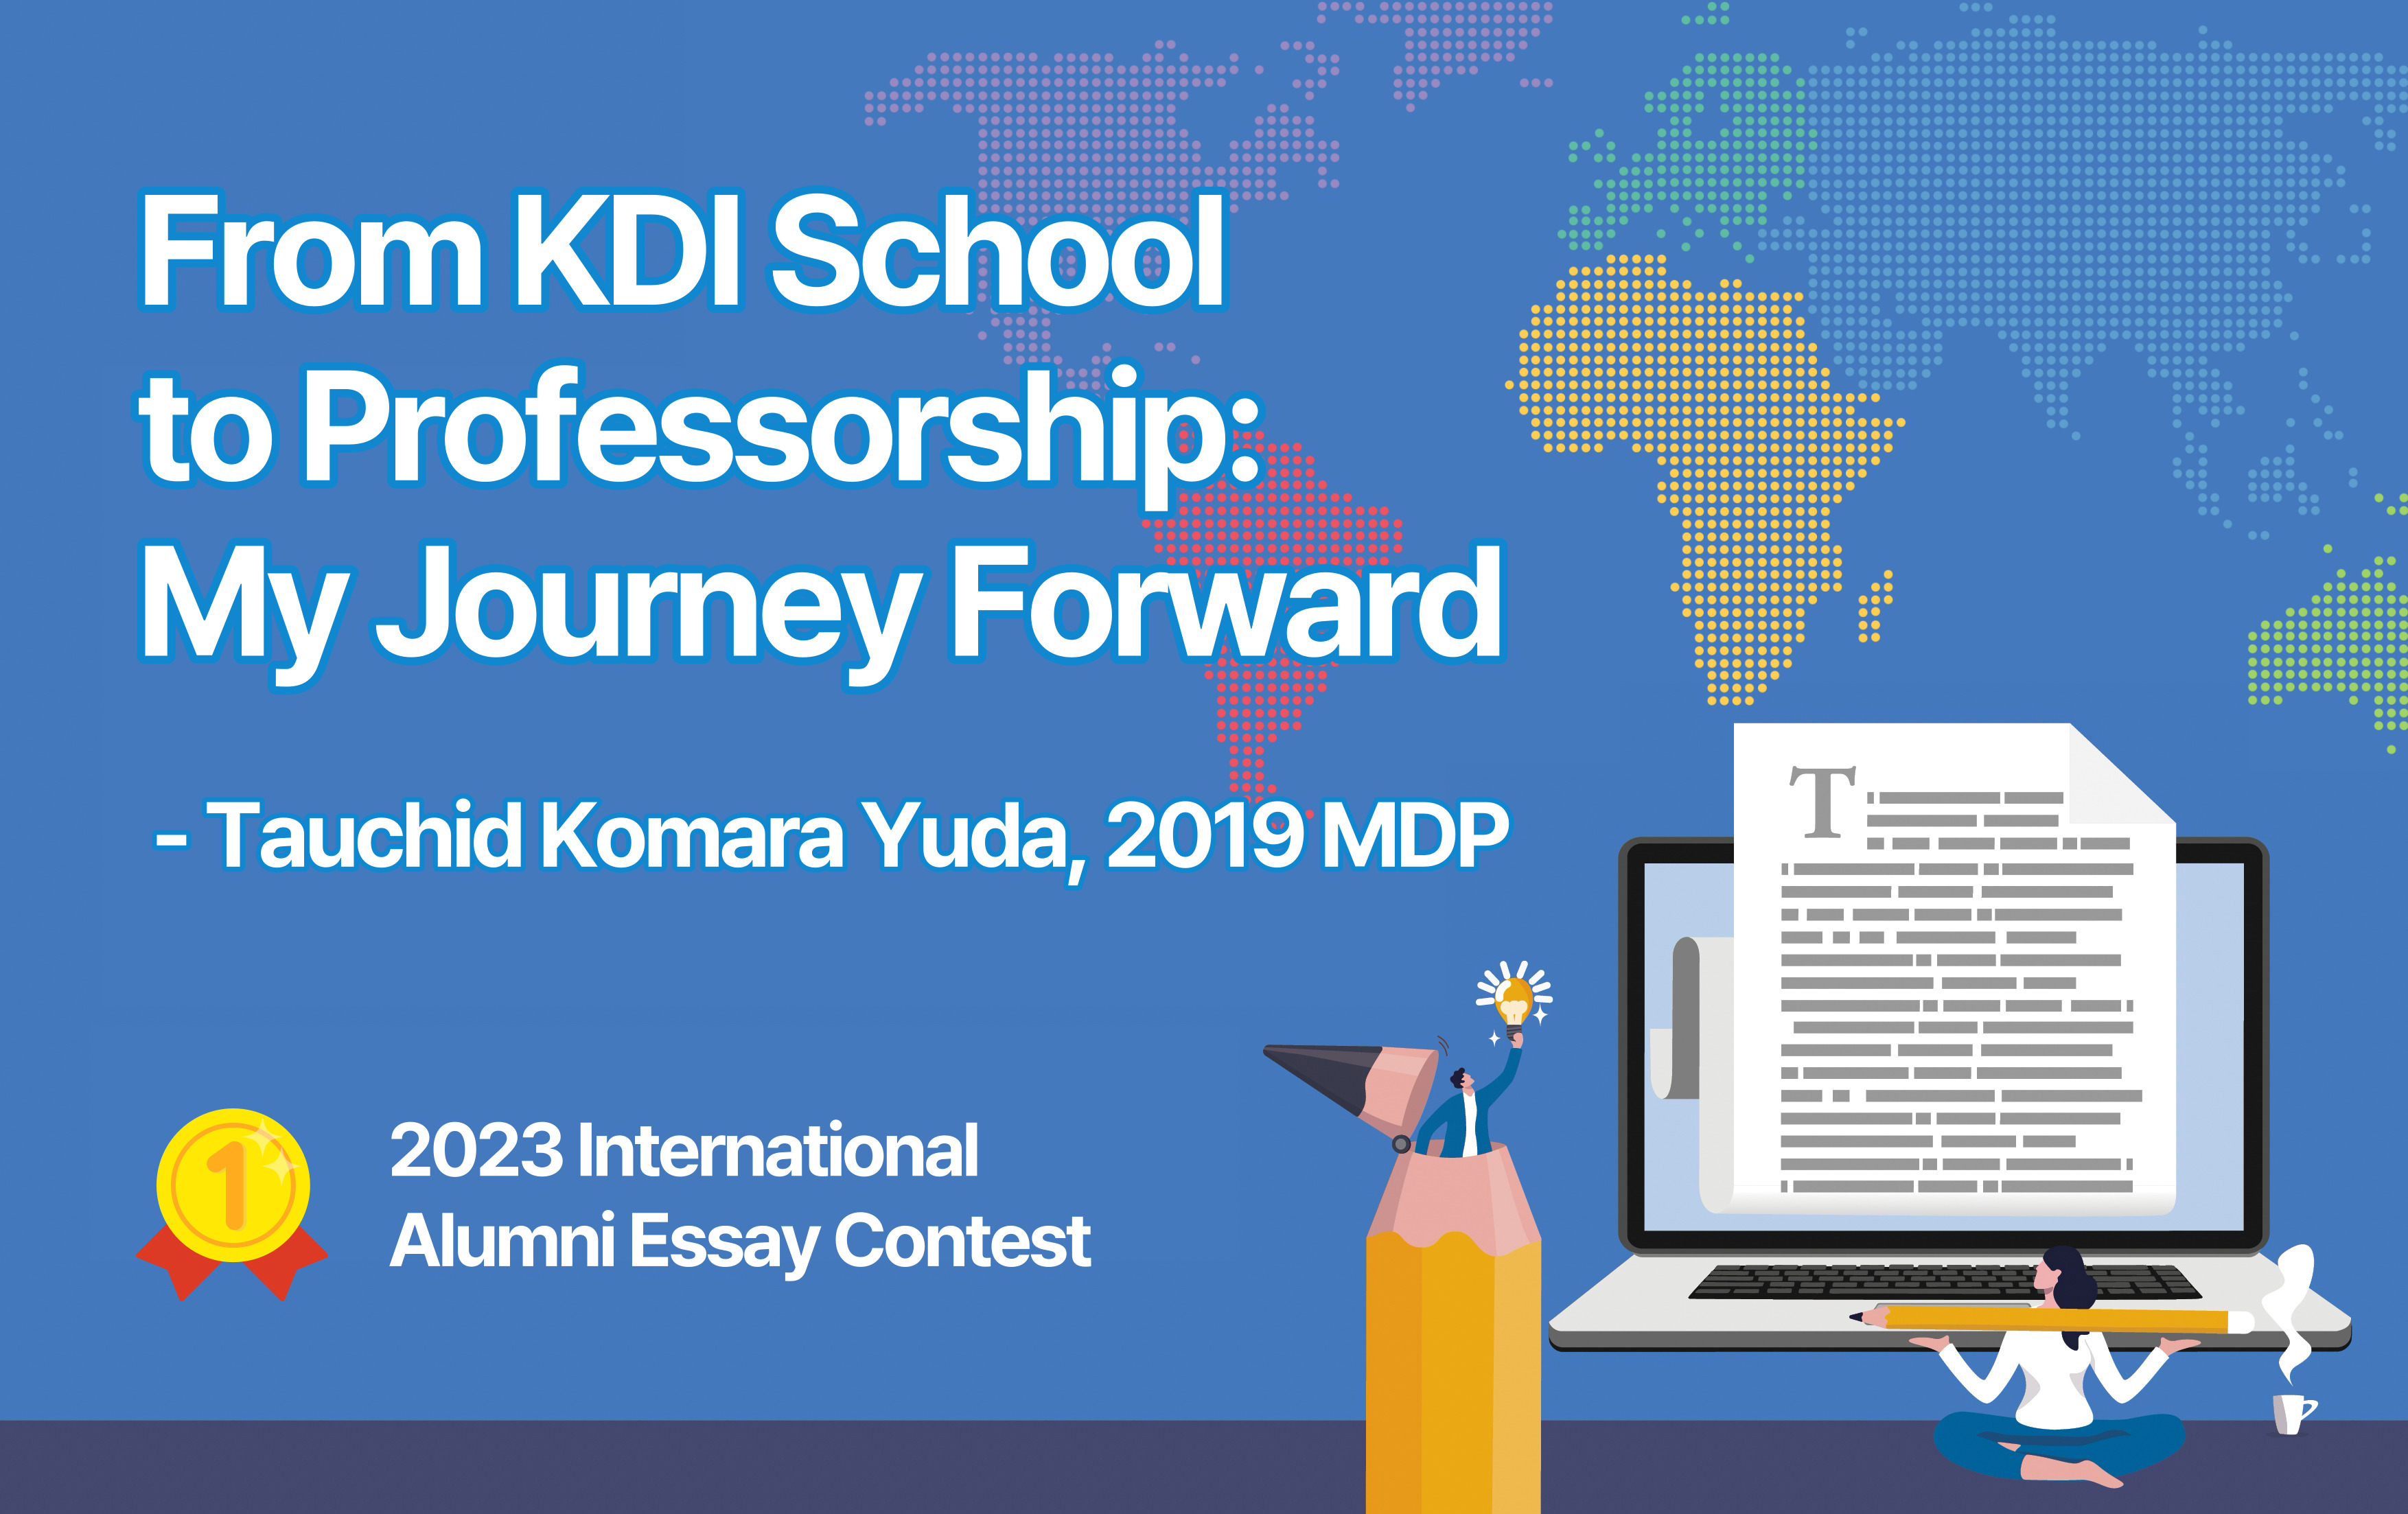 From KDI School to Professorship: My Journey Forward (Tauchid Komara Yuda, 2019 MDP)